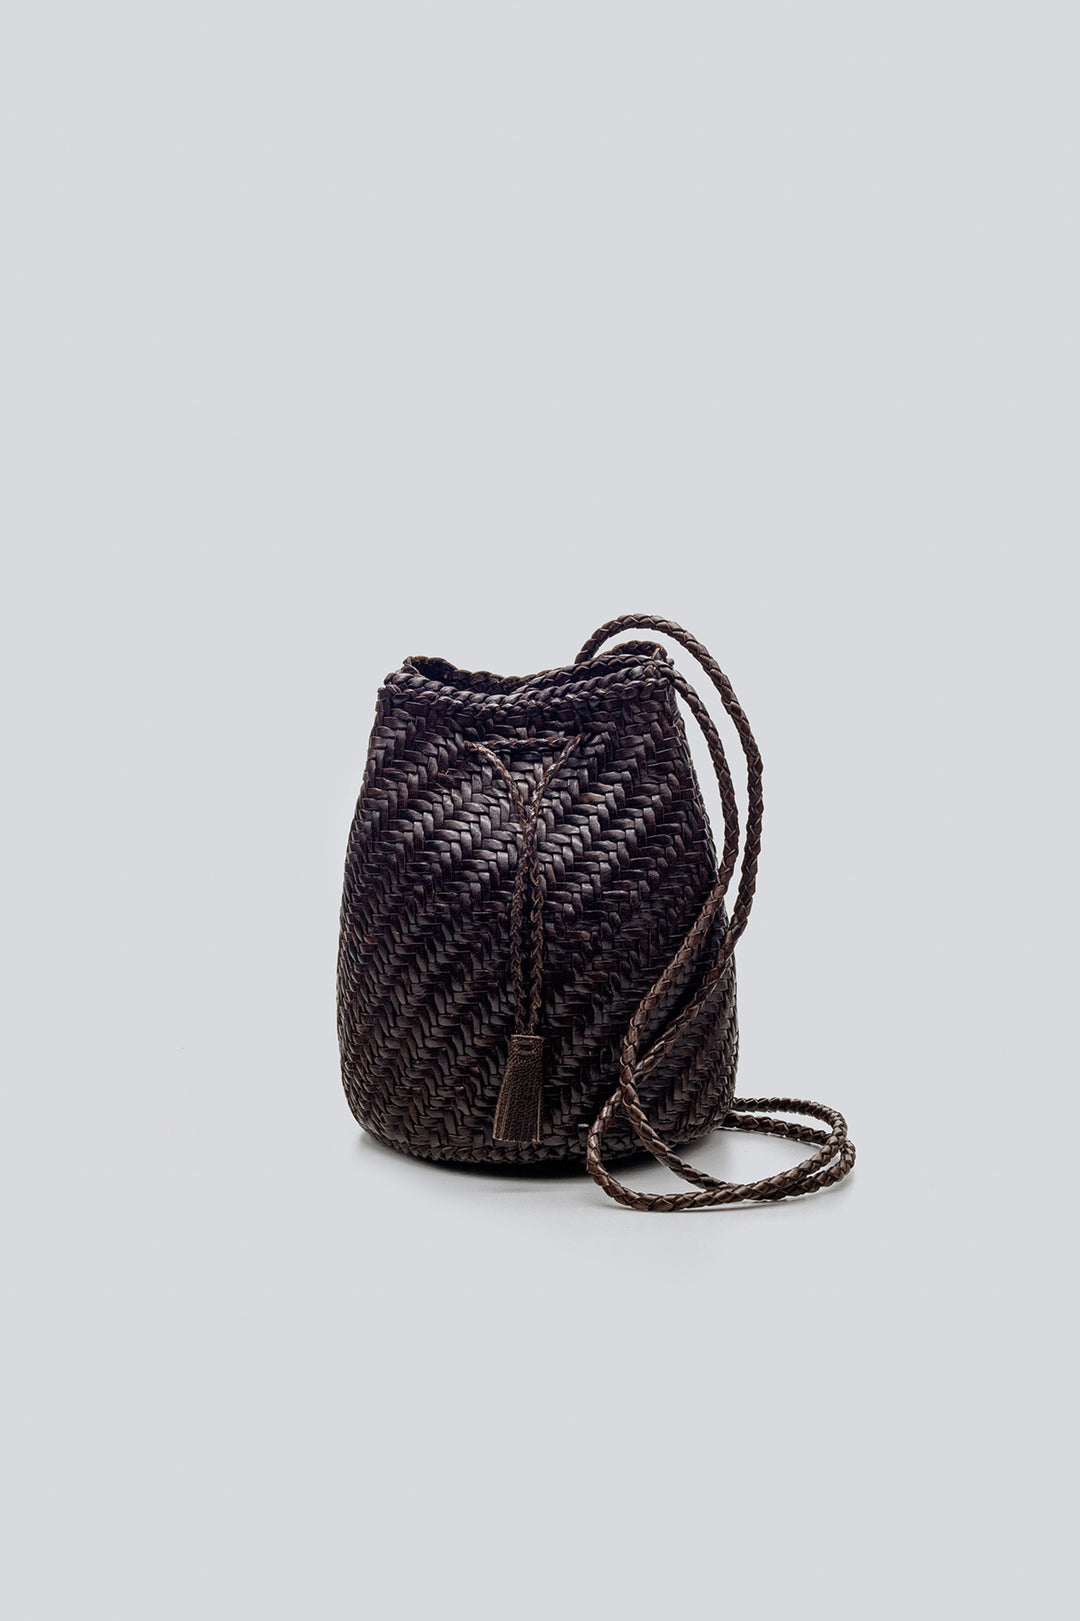 Dragon Diffusion woven leather bag handmade - Pompom Double Jump Dark Brown